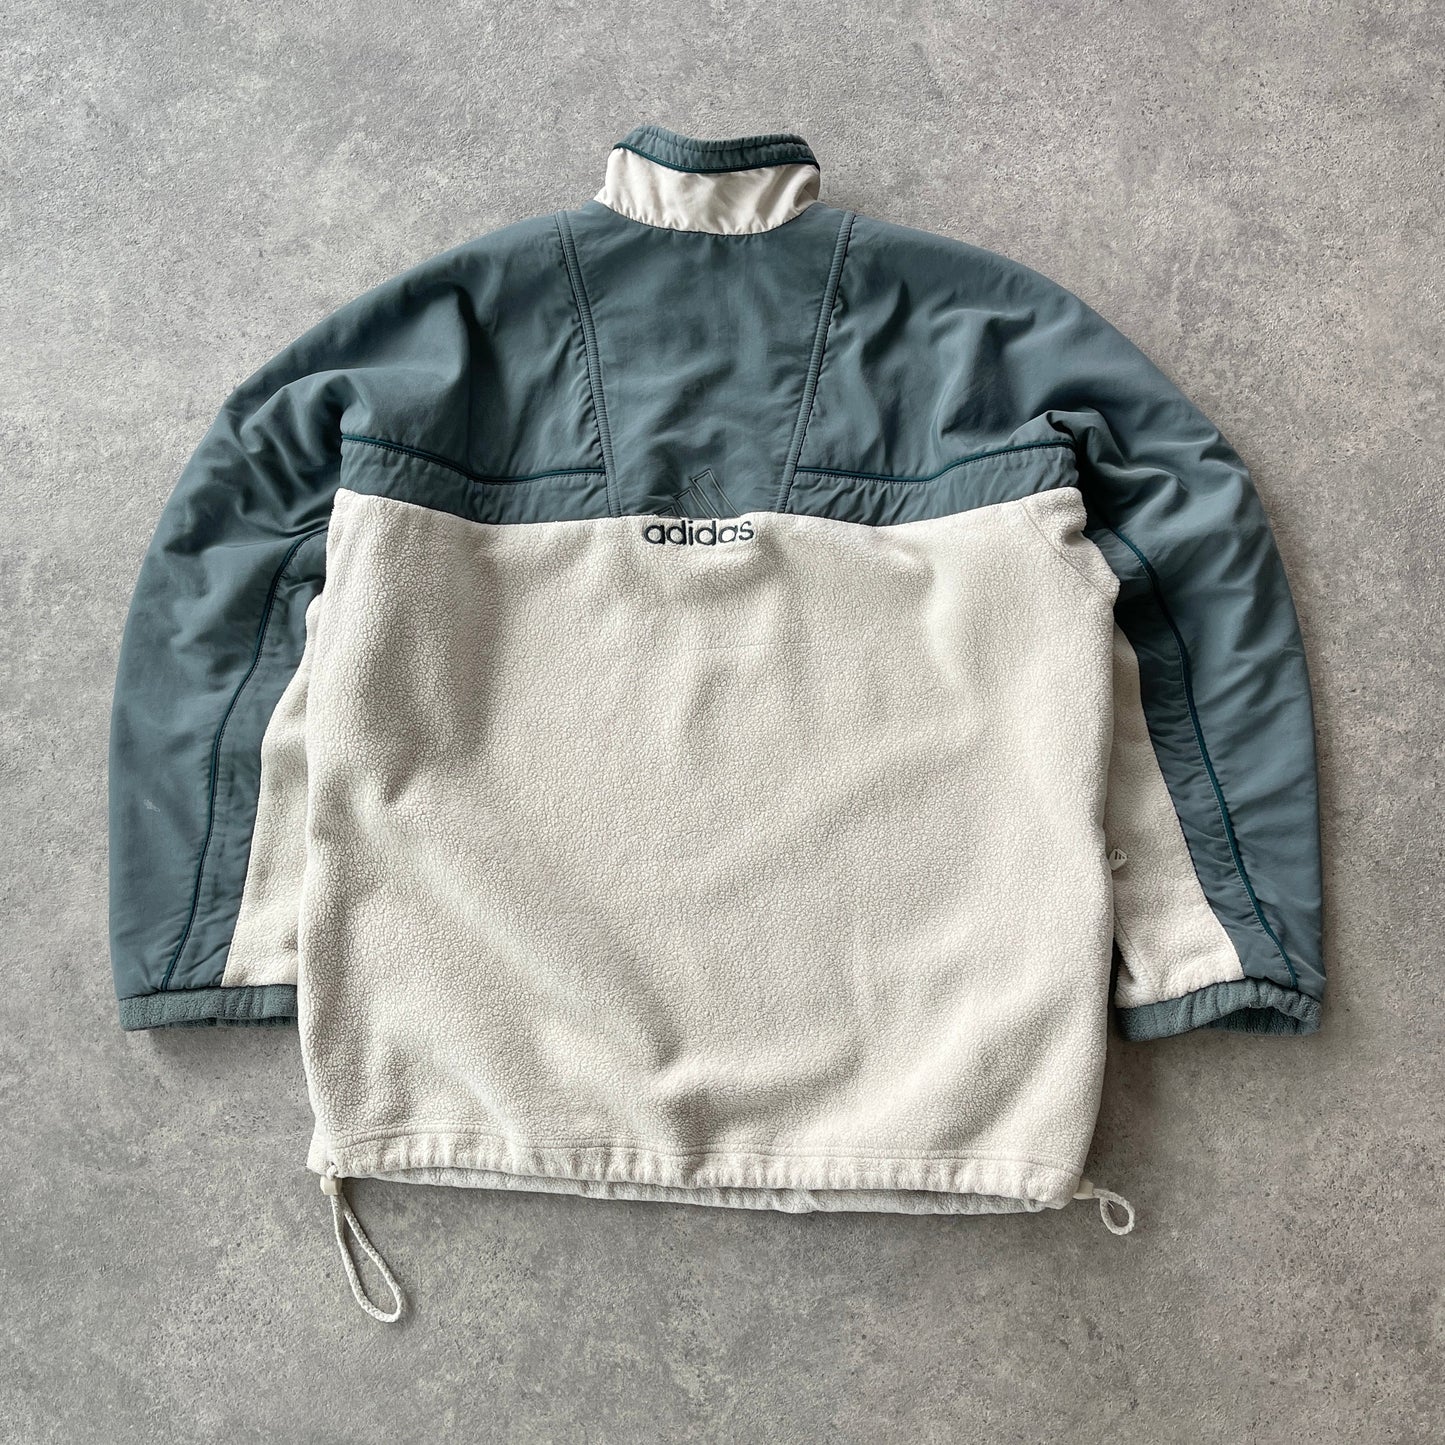 Adidas 1990s 1/4 zip heavyweight fleece jacket (L)